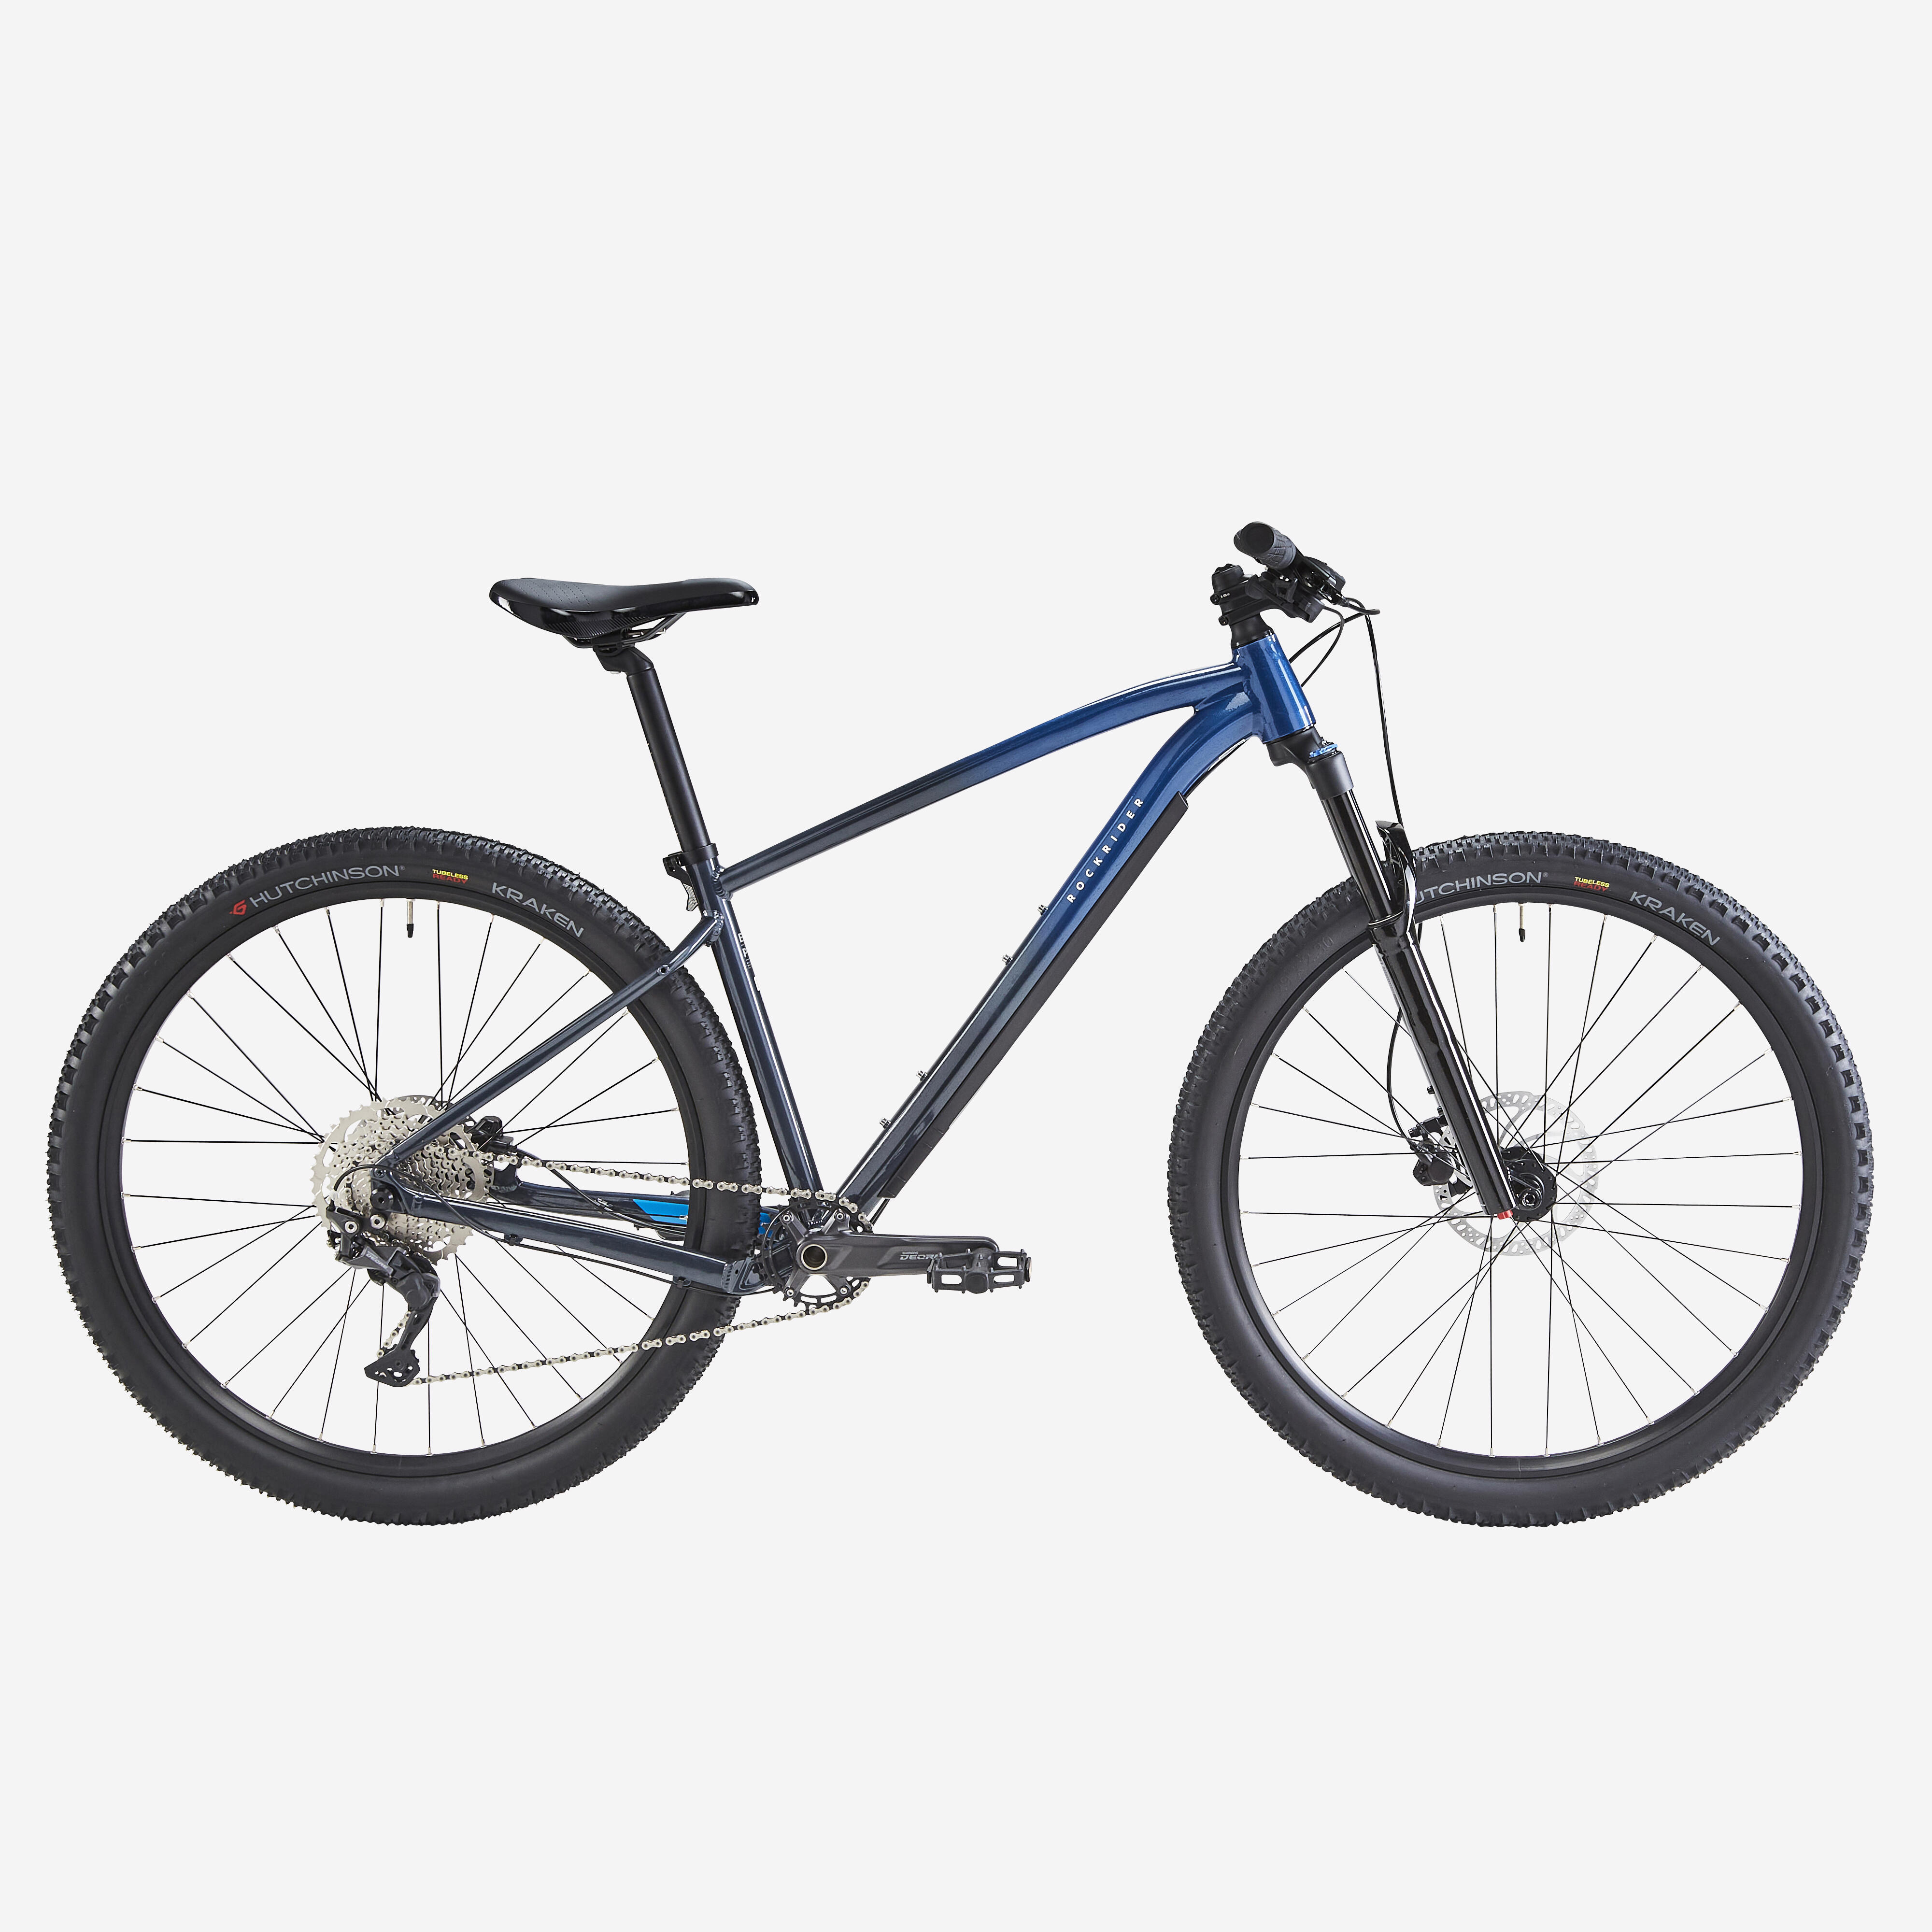 29" Touring Mountain Bike - Explore 540 Blue/Black - ROCKRIDER